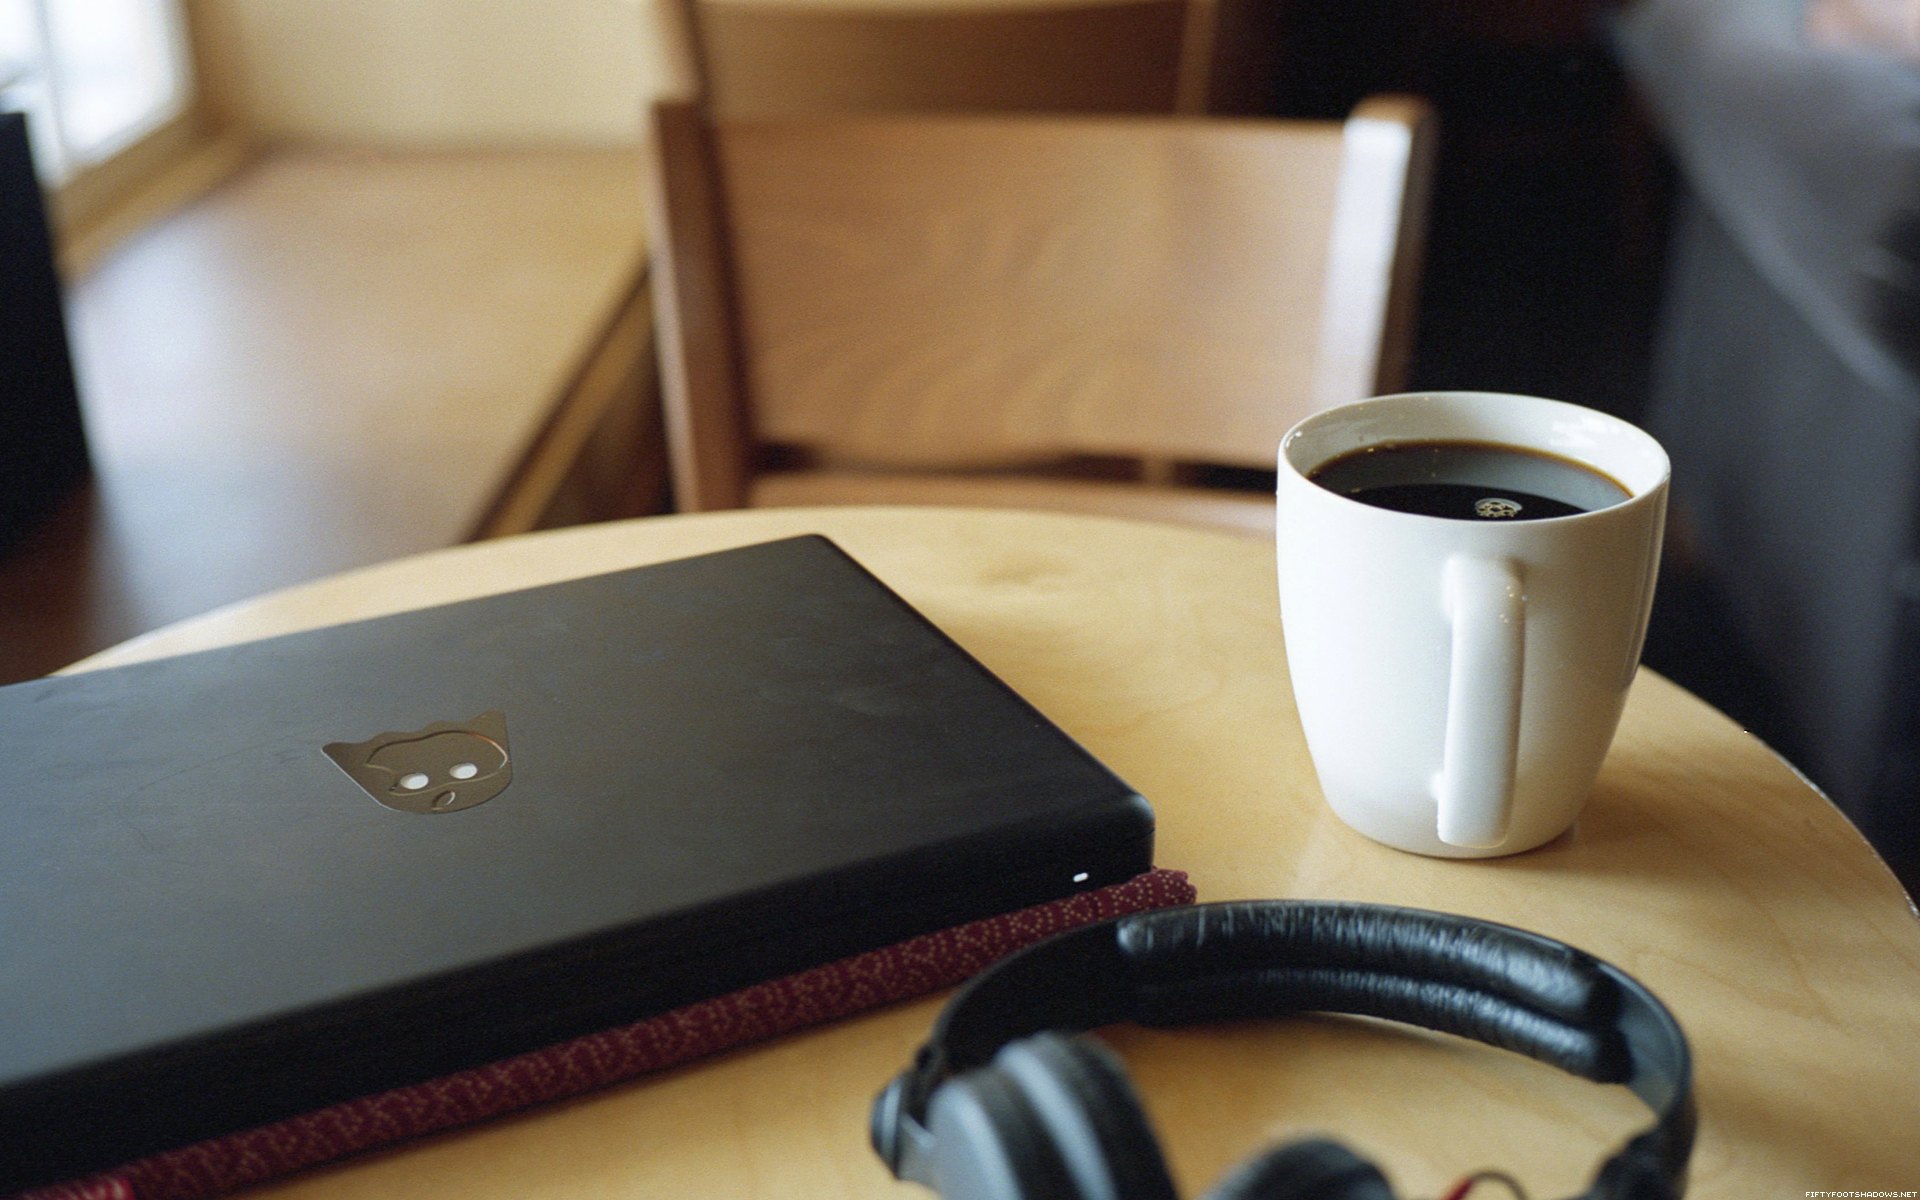 Наушники для ноутбука. Чашка кофе и наушники. Ноут с наушниками и кофе. Телефон и наушники на столе.